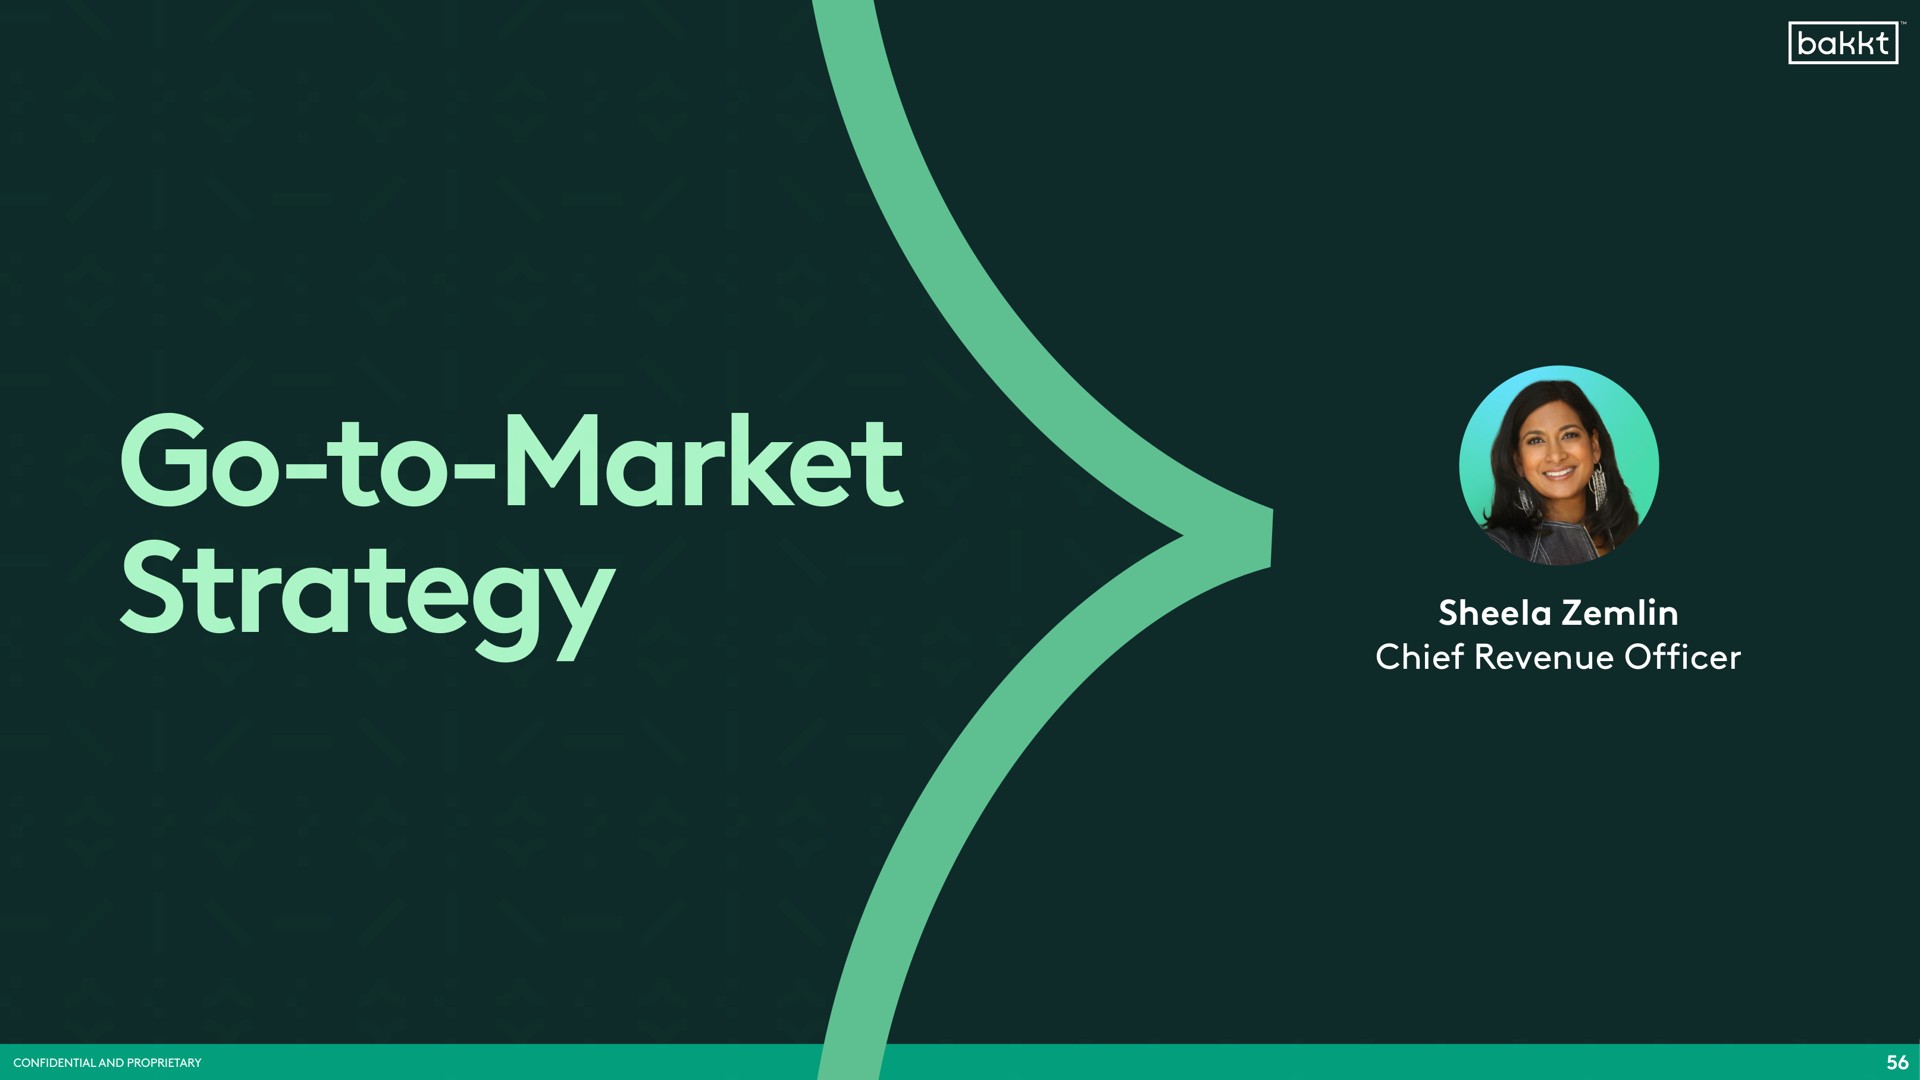 go to market strategy chief revenue officer | Bakkt